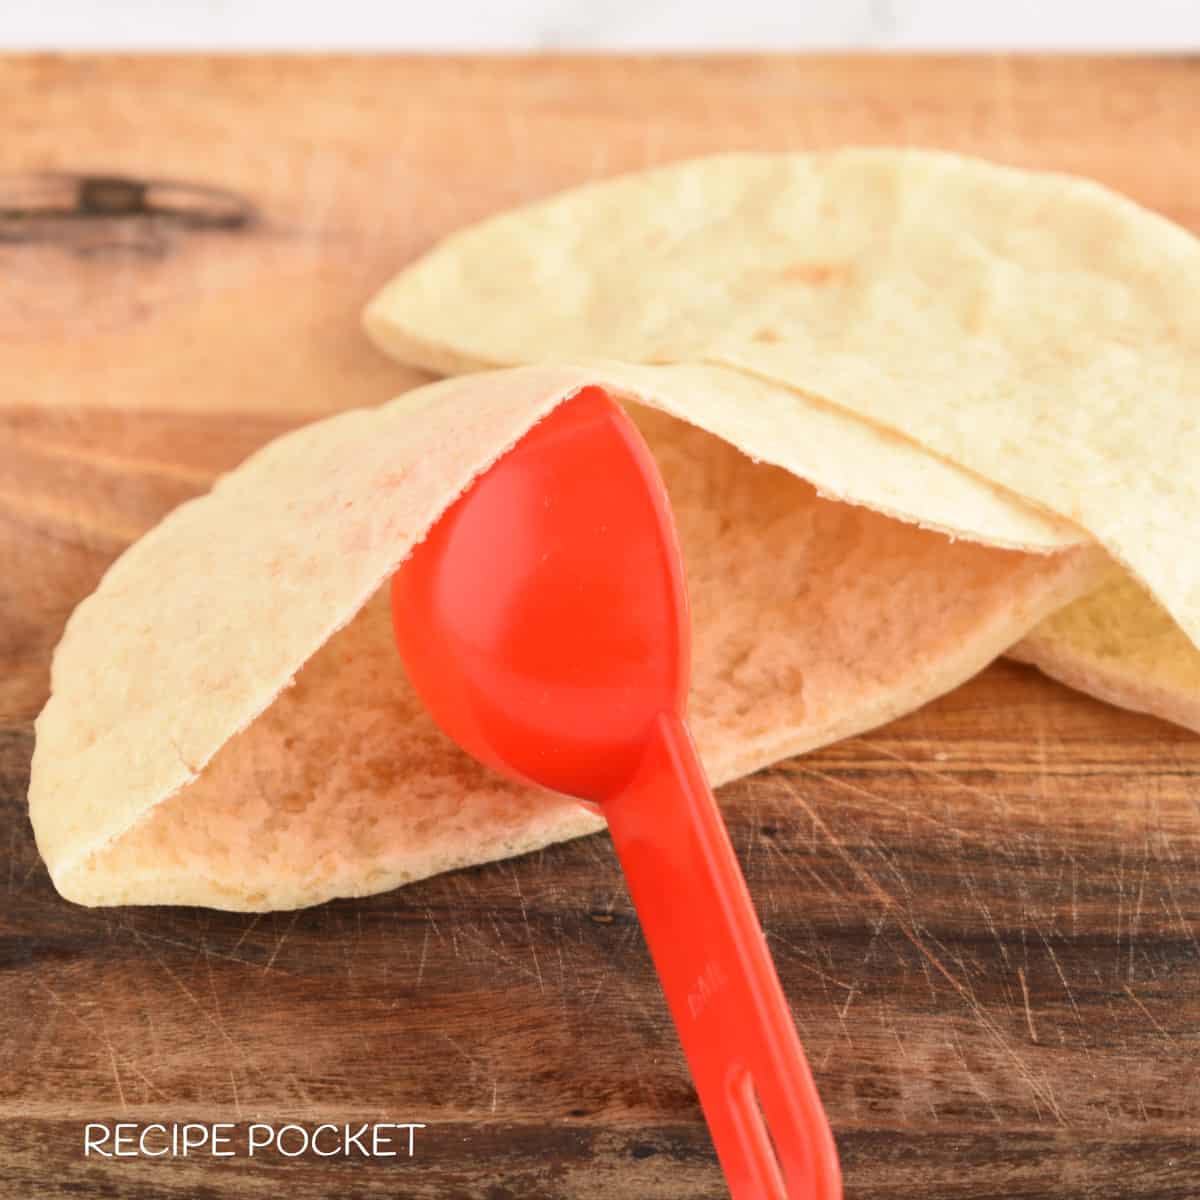 Image showing the pocket inside homemade pita pocket bread.